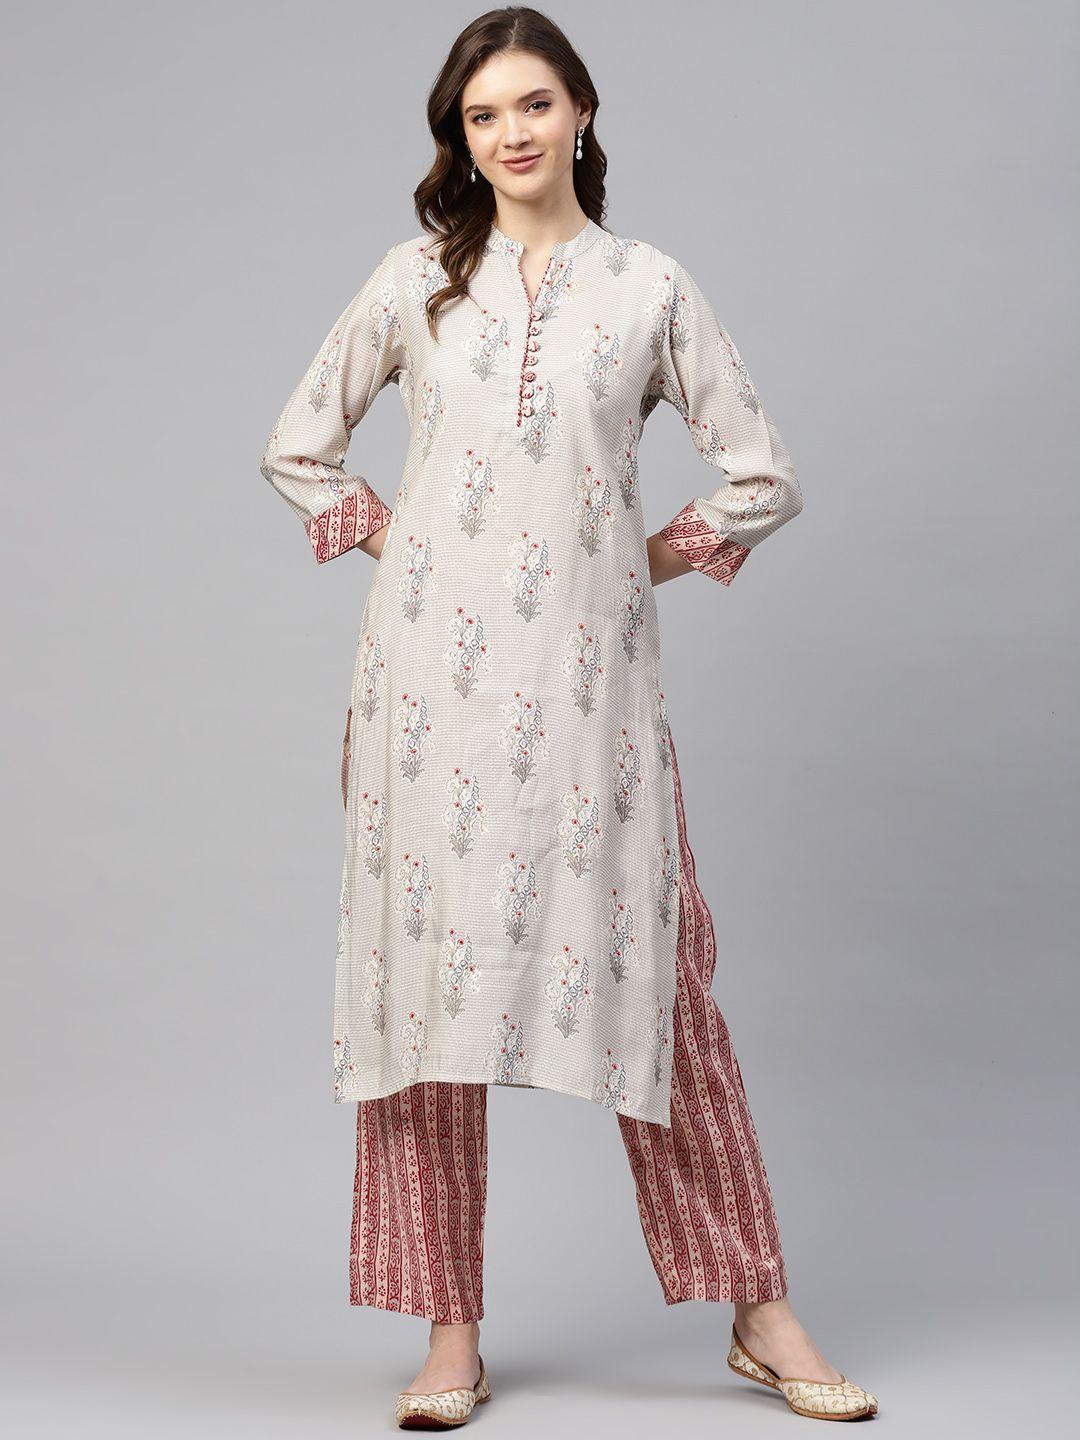 readiprint fashions women off white & red ethnic motifs print kurta with trousers